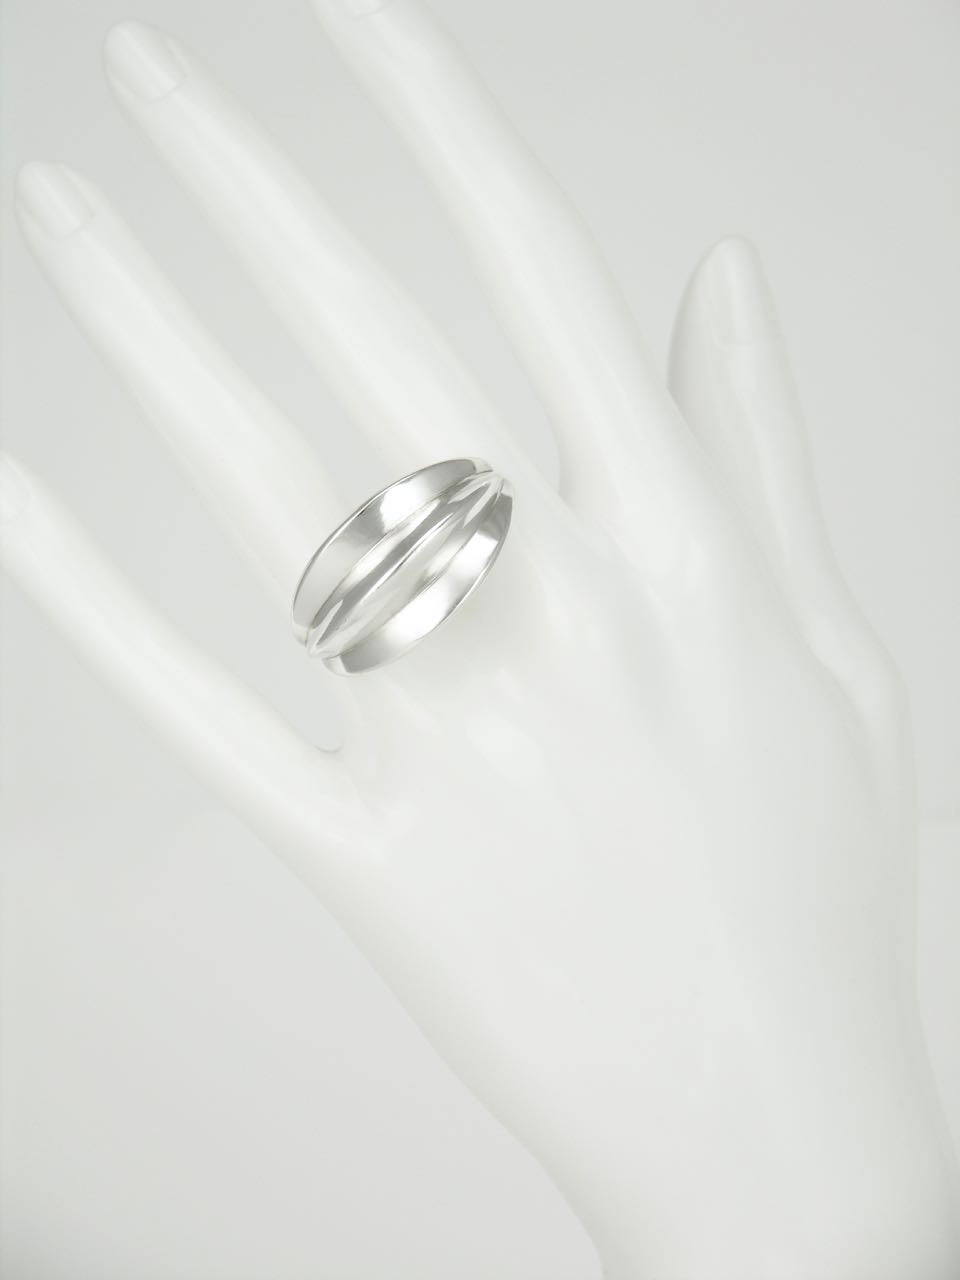 Georg Jensen Silver Domed Two Finger Ring - Design 161 Ibe Dahlquist